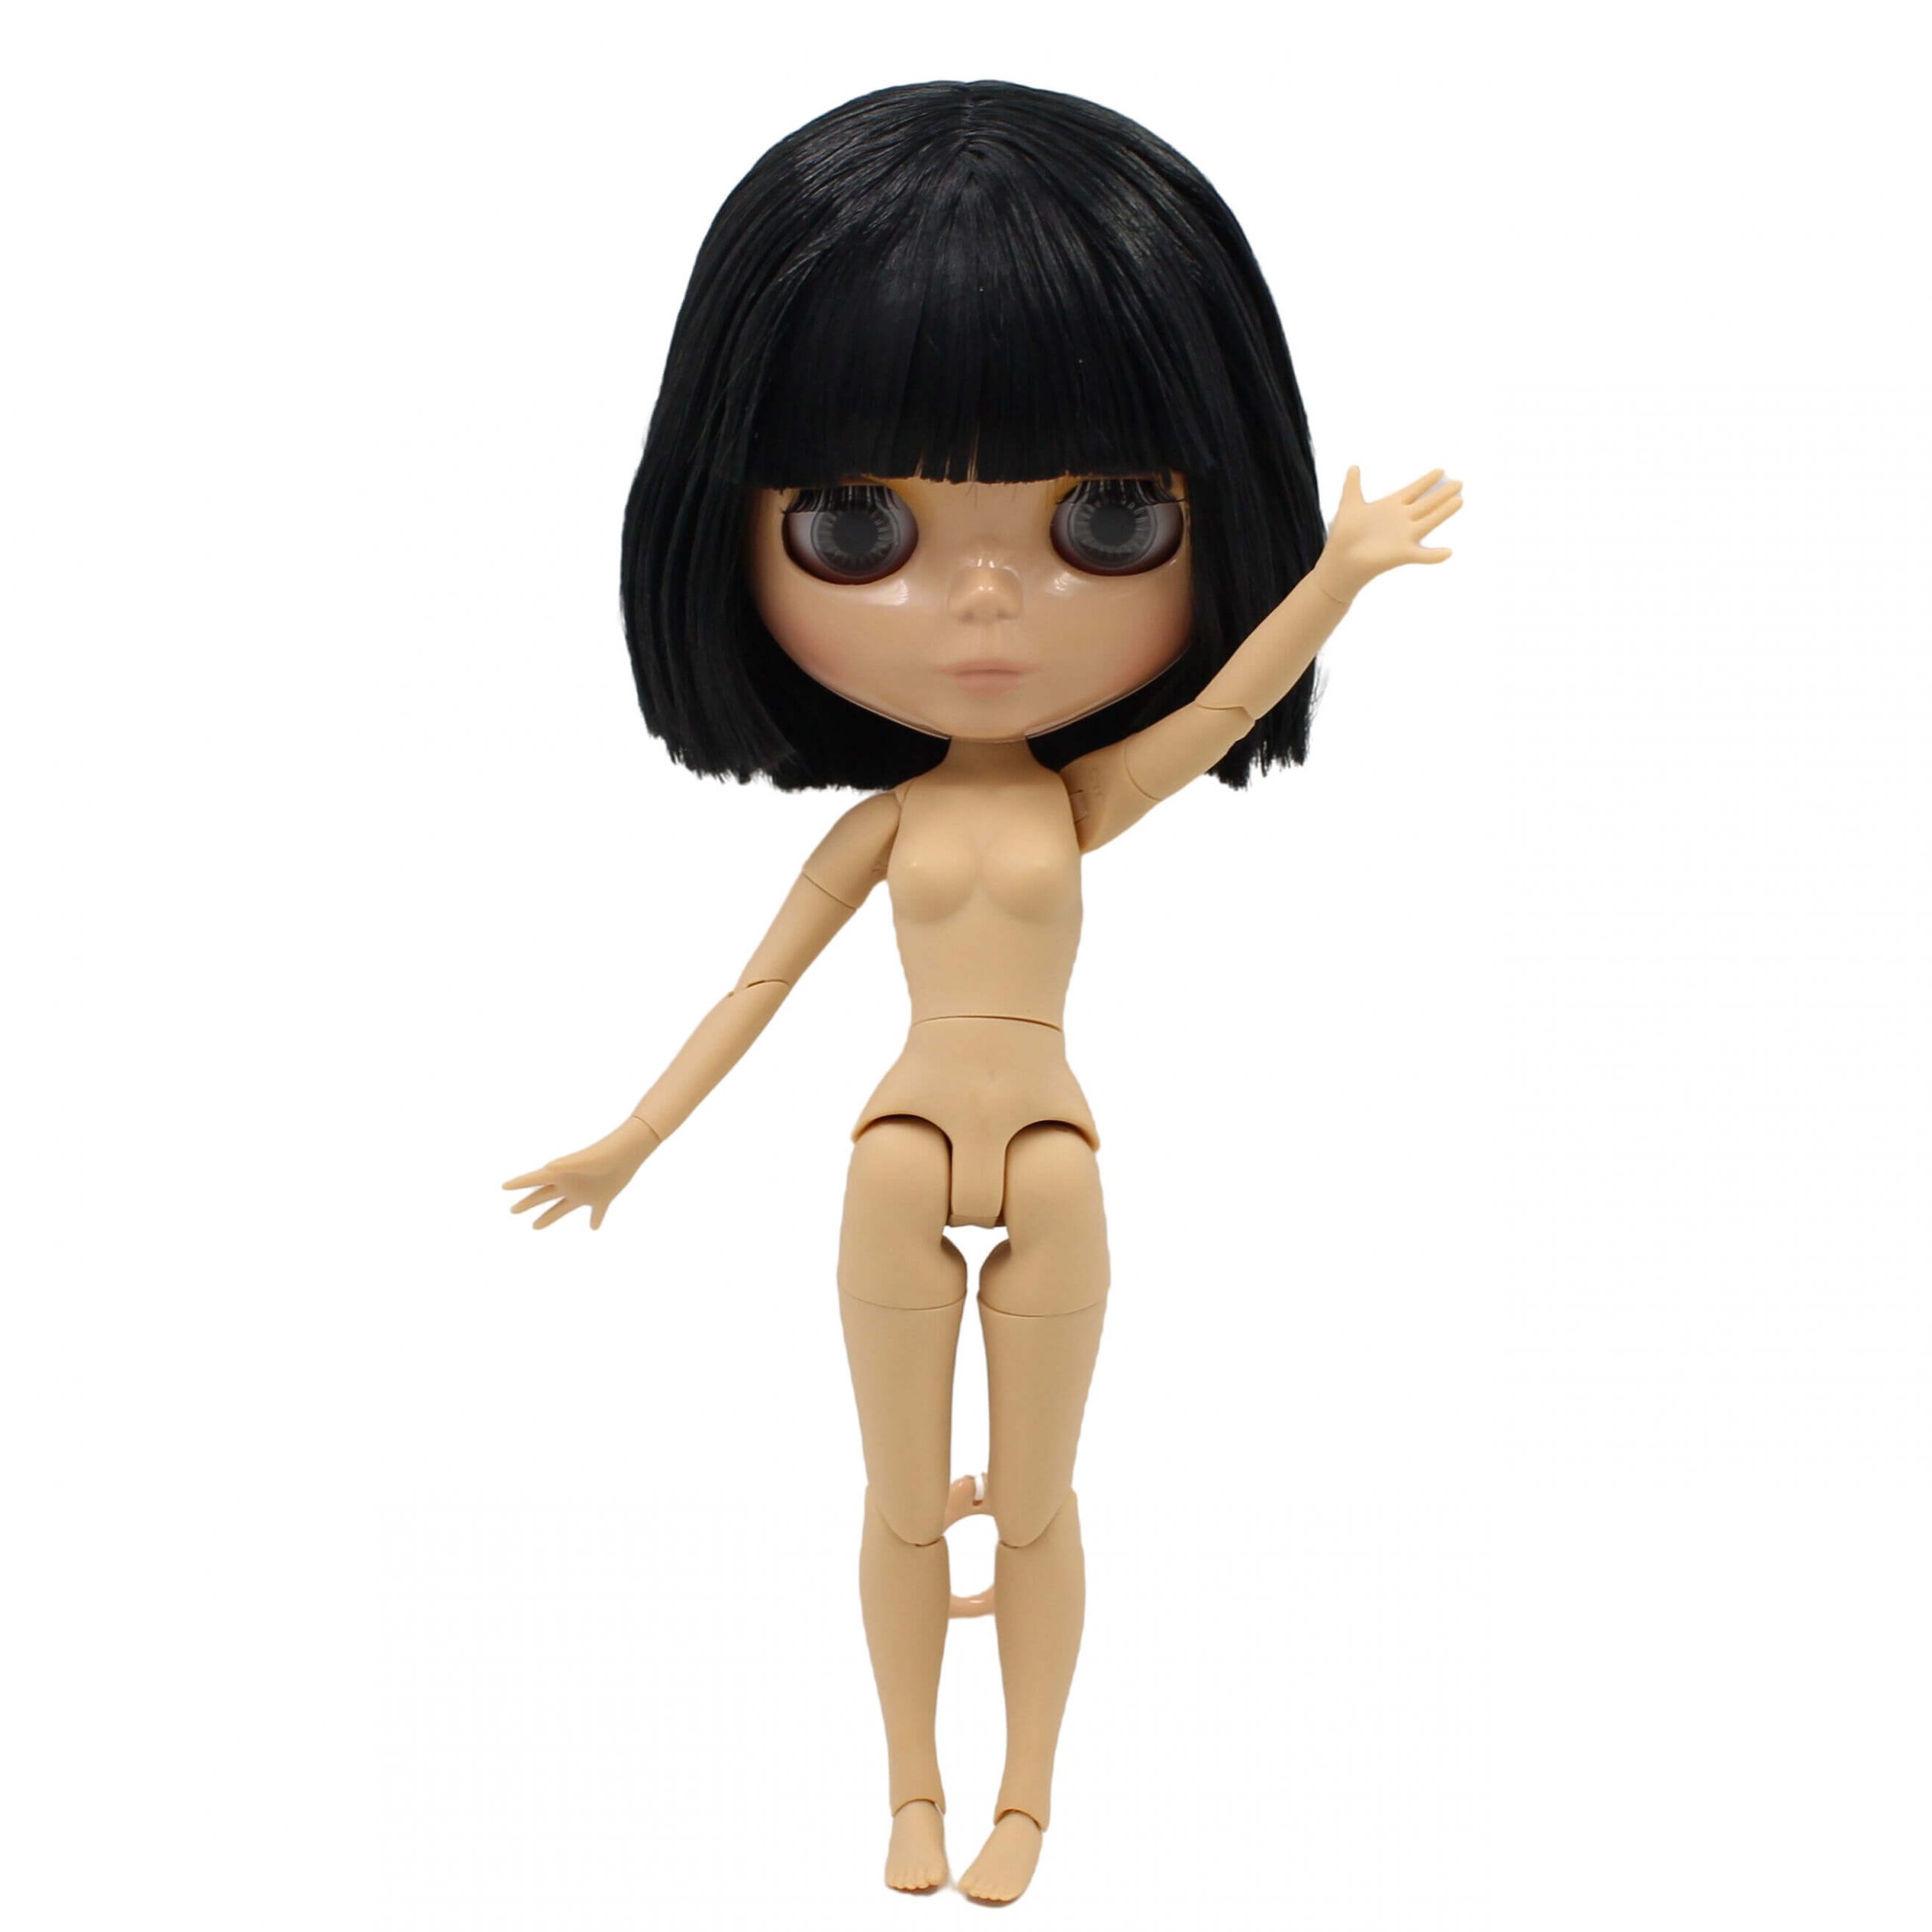 Neo Blythe Doll with Black Hair, Tan Skin, Shiny Face & Jointed Body Black Hair Factory Blythe Doll Shiny Face Factory Blythe Doll Tan Skin Factory Blythe Doll